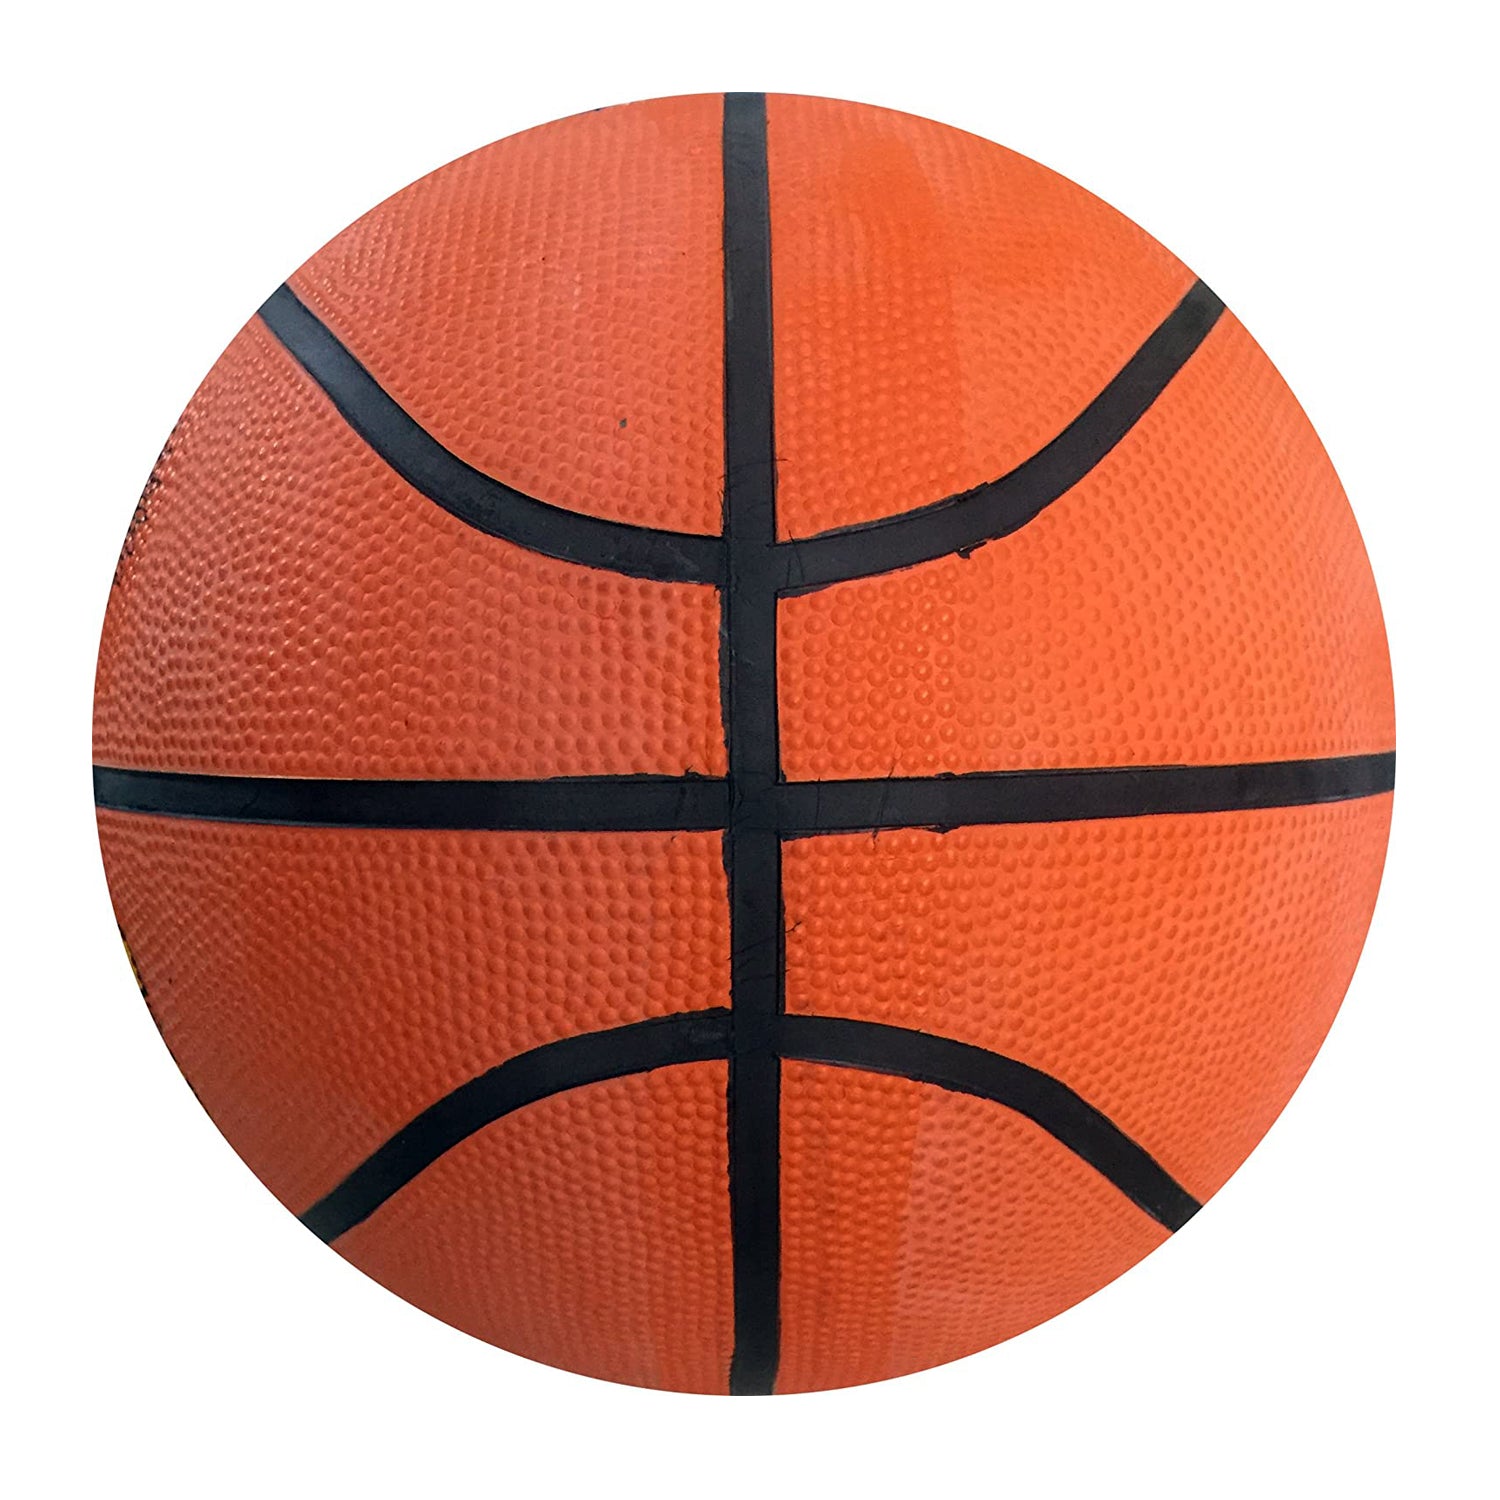 HRS Champion Rubber Moulded Basketball, Orange - Best Price online Prokicksports.com